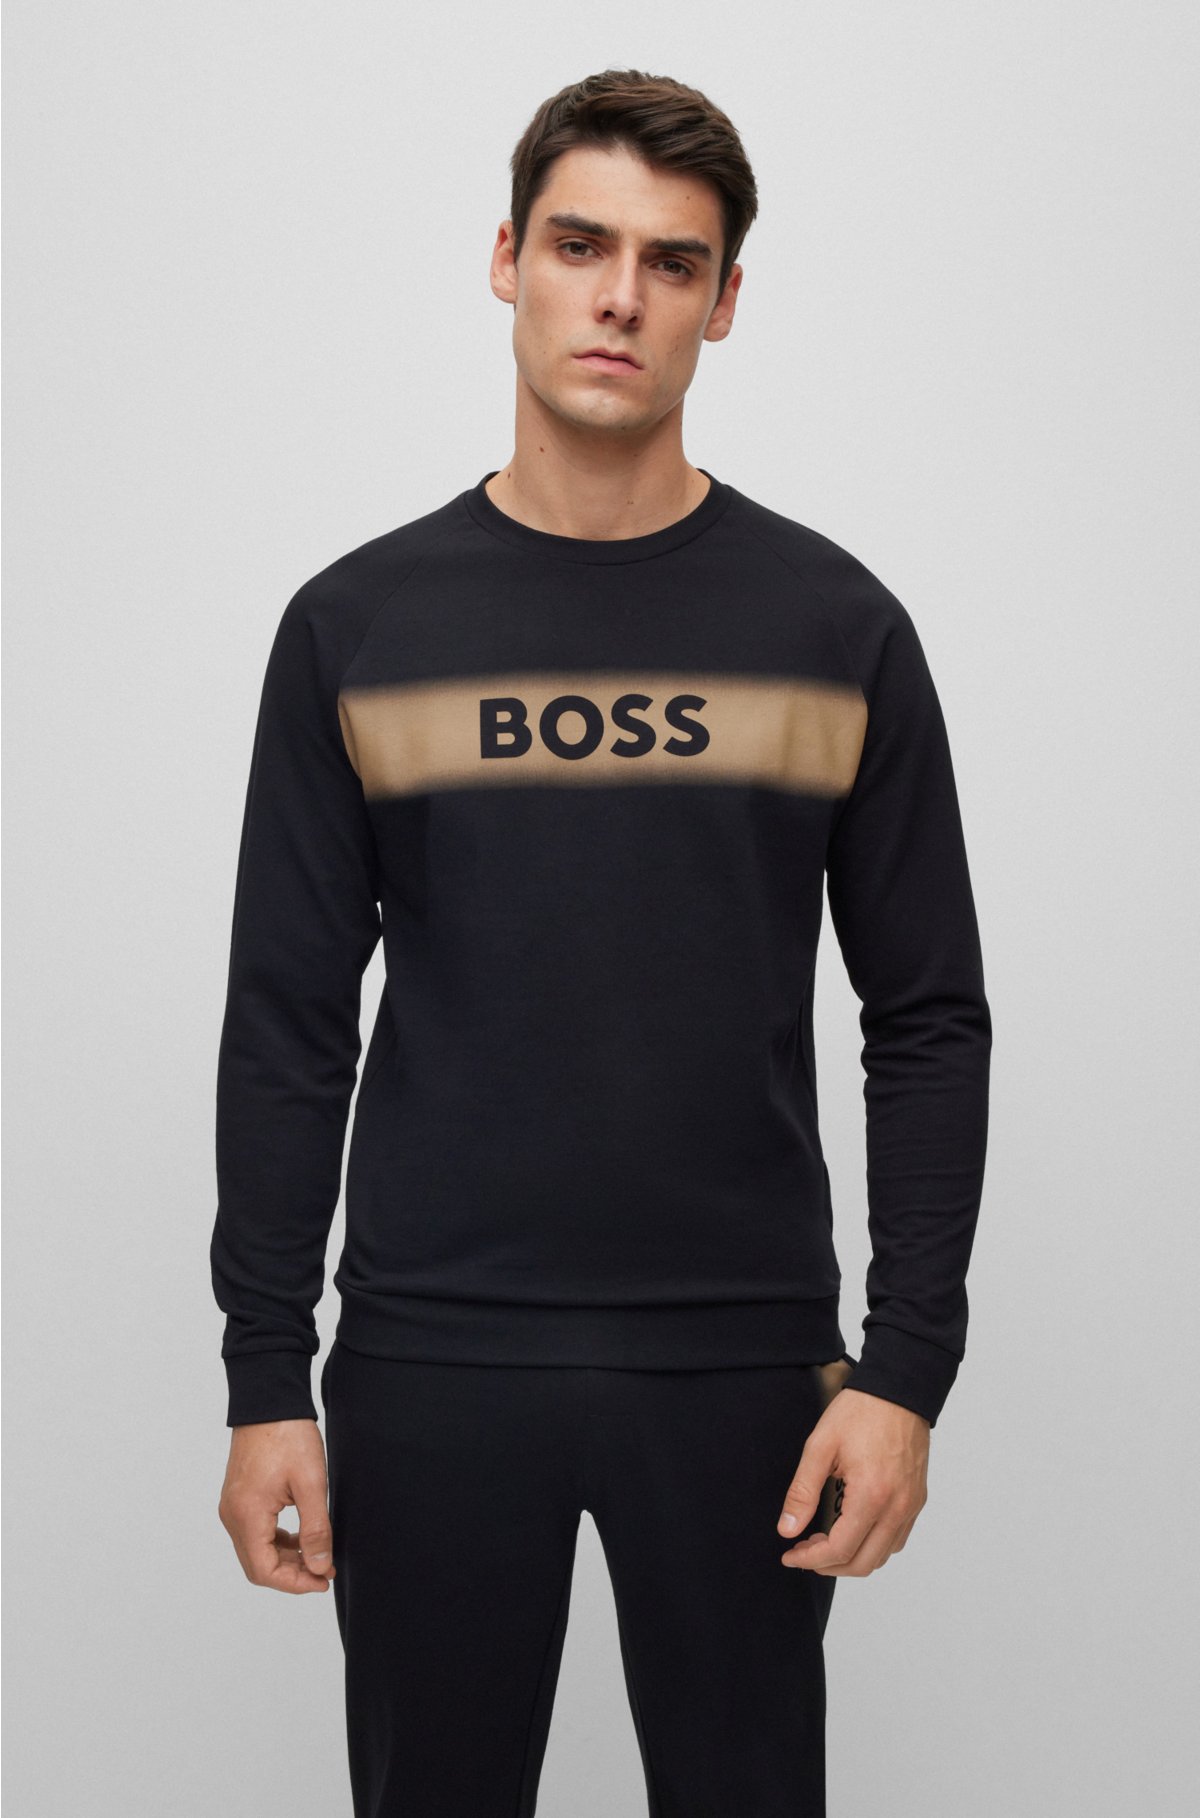 BOSS - オーガニックコットン レギュラーフィット スウェットシャツ